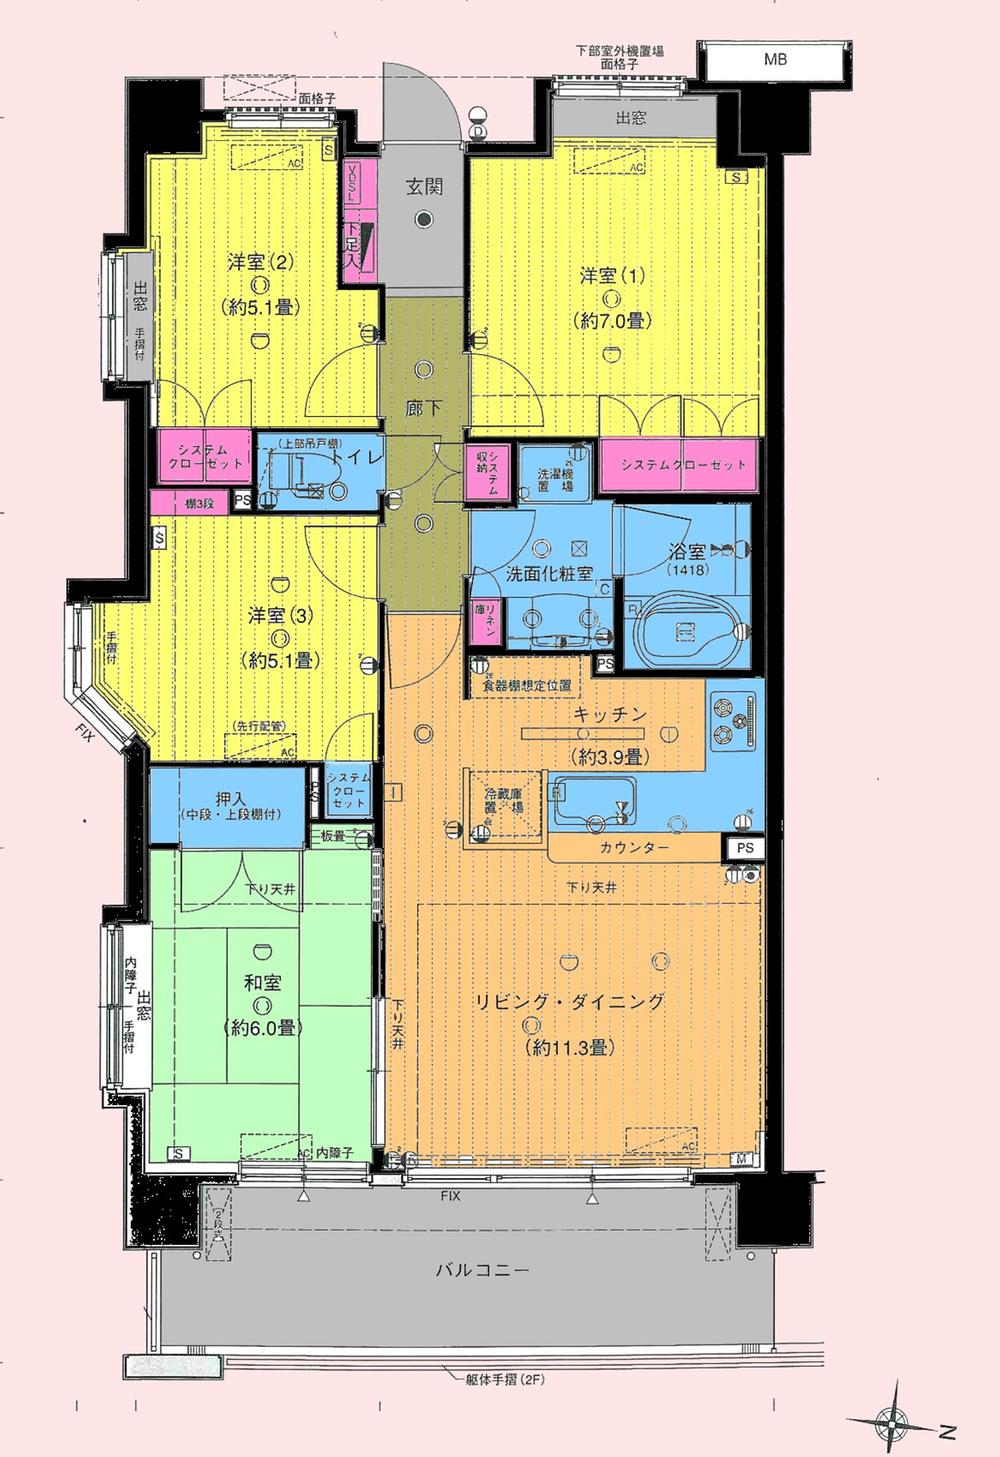 Floor plan. 4LDK, Price 20.8 million yen, Occupied area 81.12 sq m , Balcony area 14 sq m